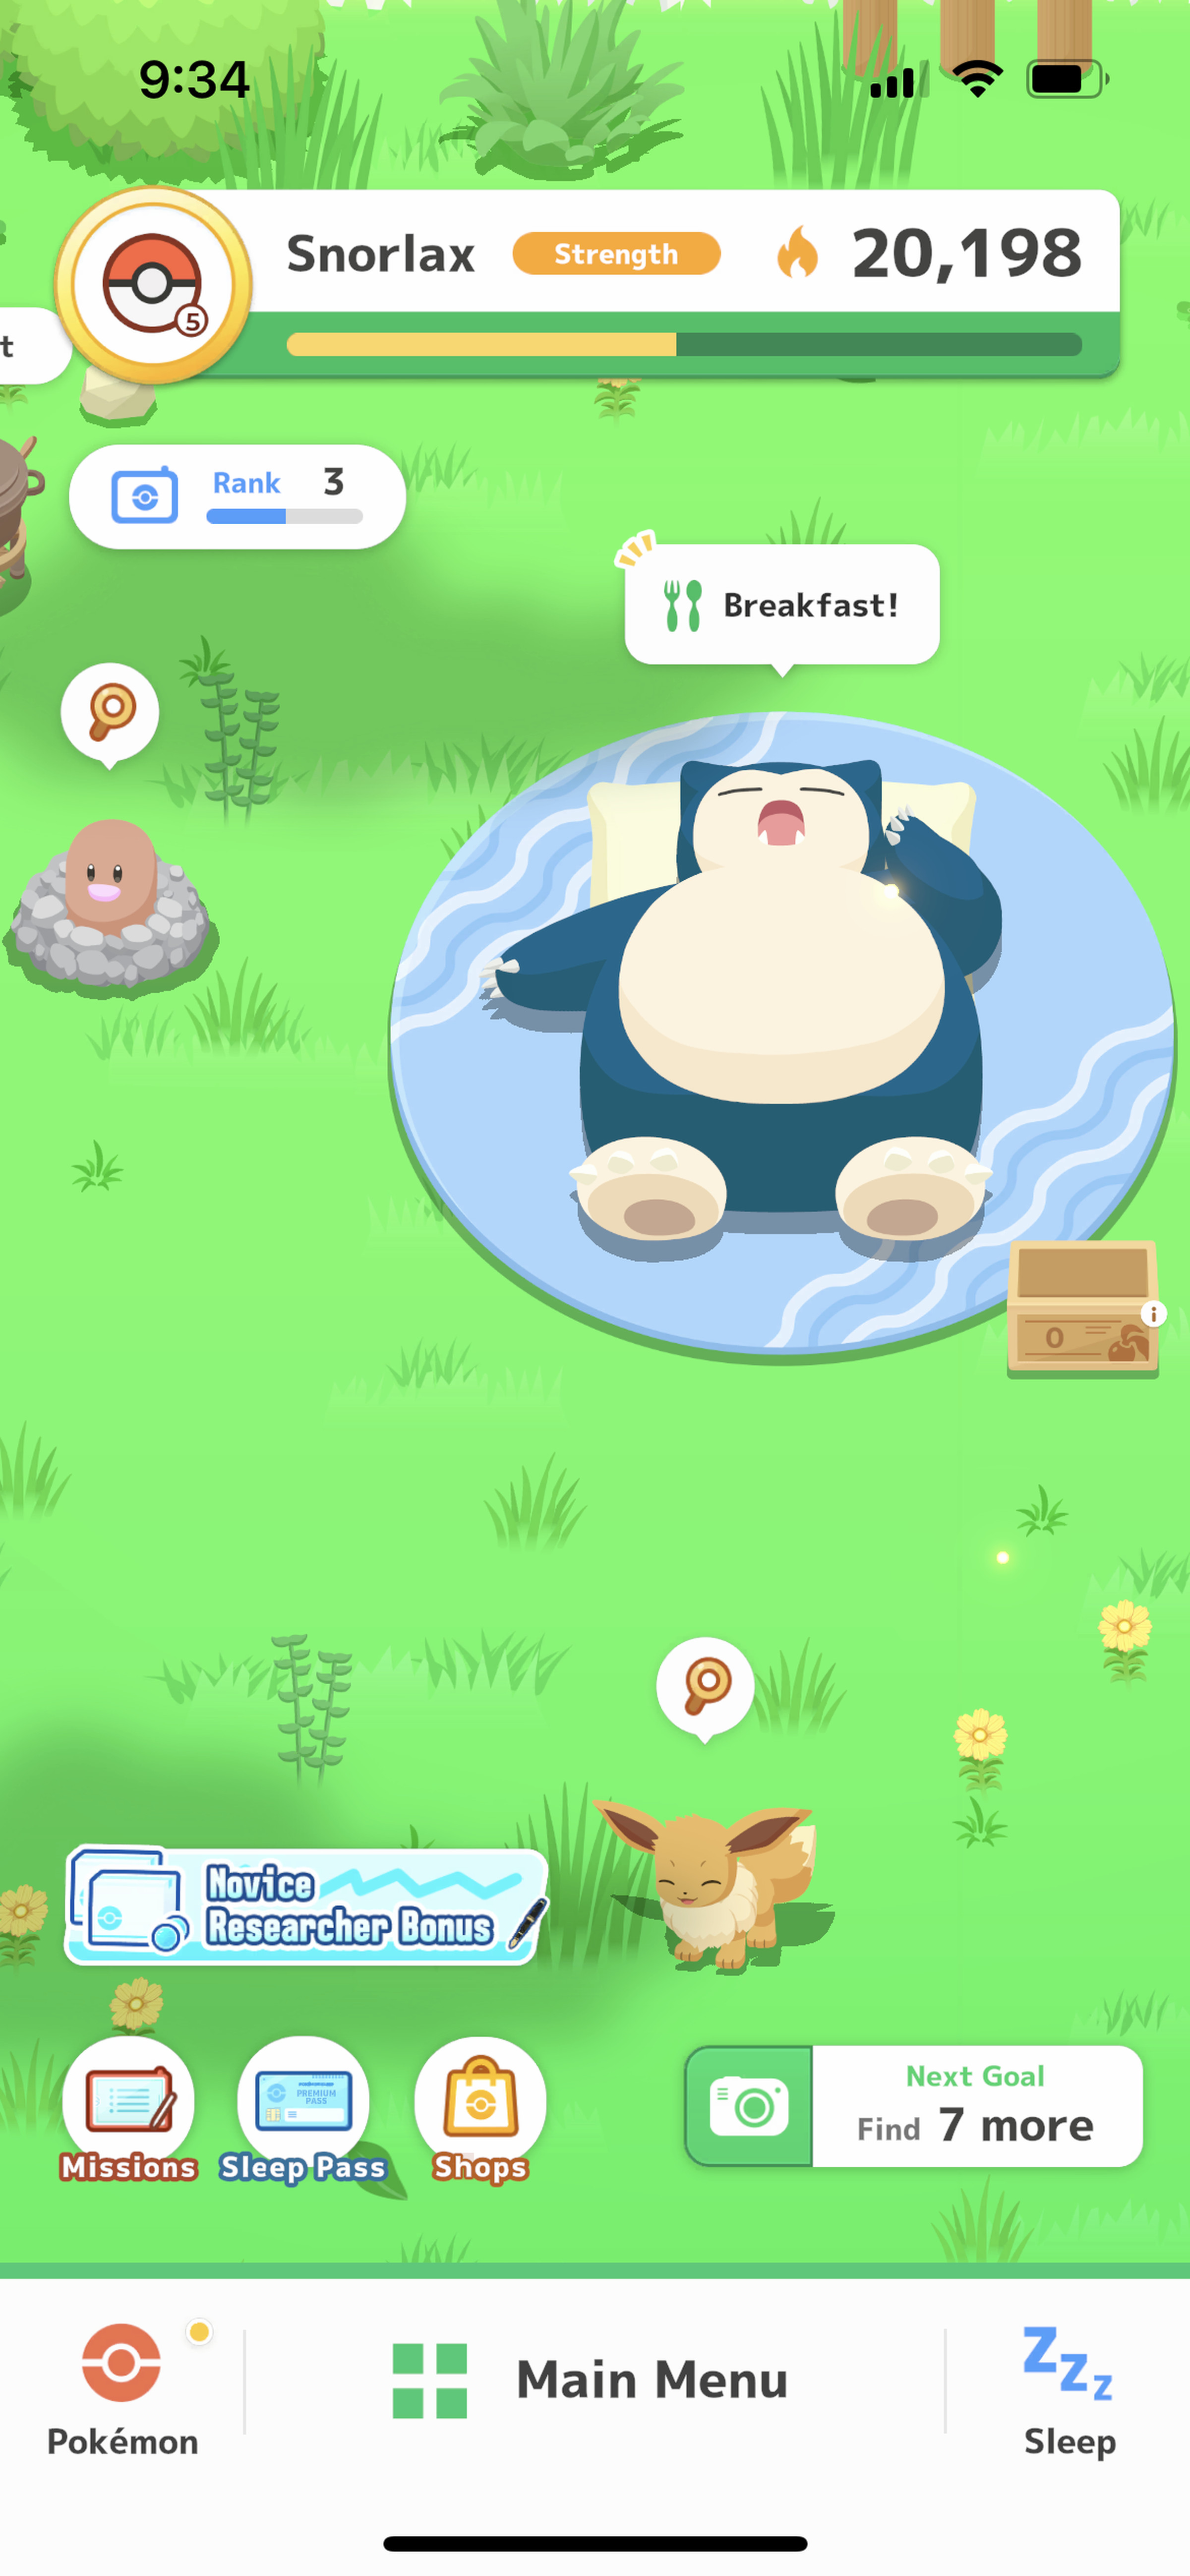 A screenshot from the video game Pokémon Sleep.